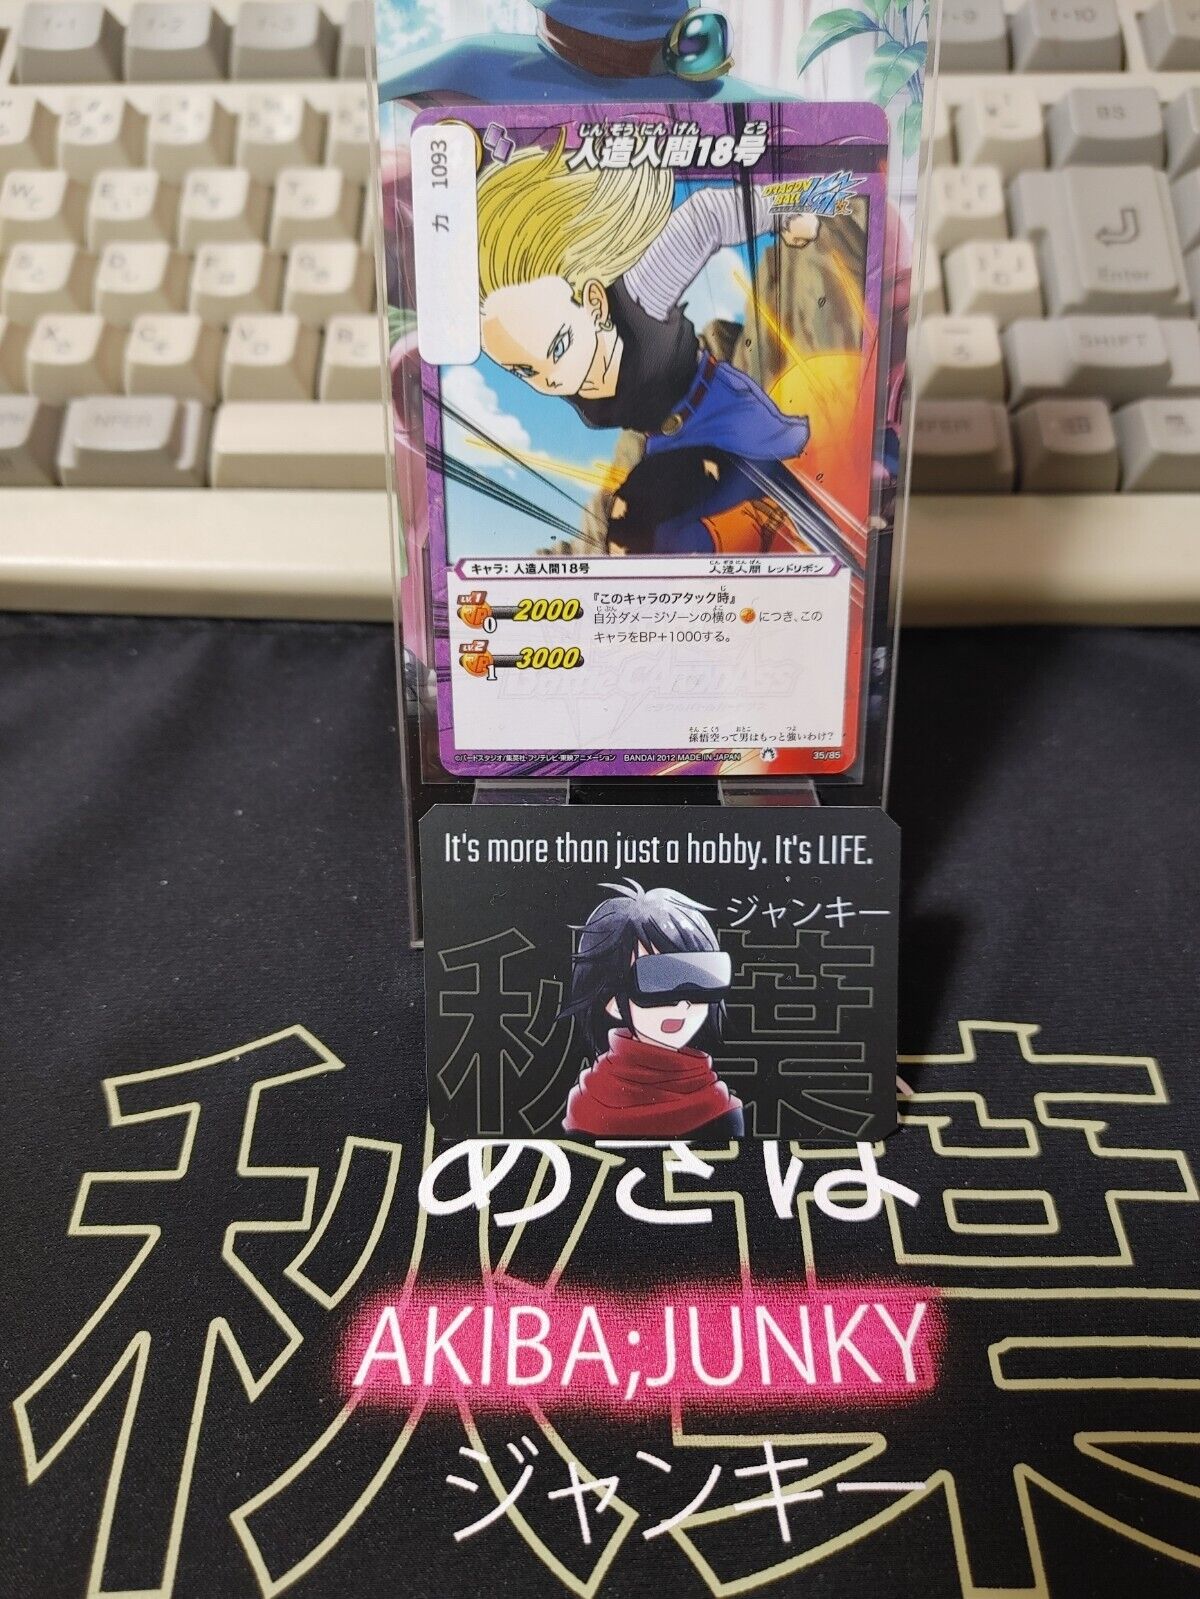 Dragon Ball Z Bandai Carddass Miracle Battle Goku Android 18 35/85 Japan Vintage